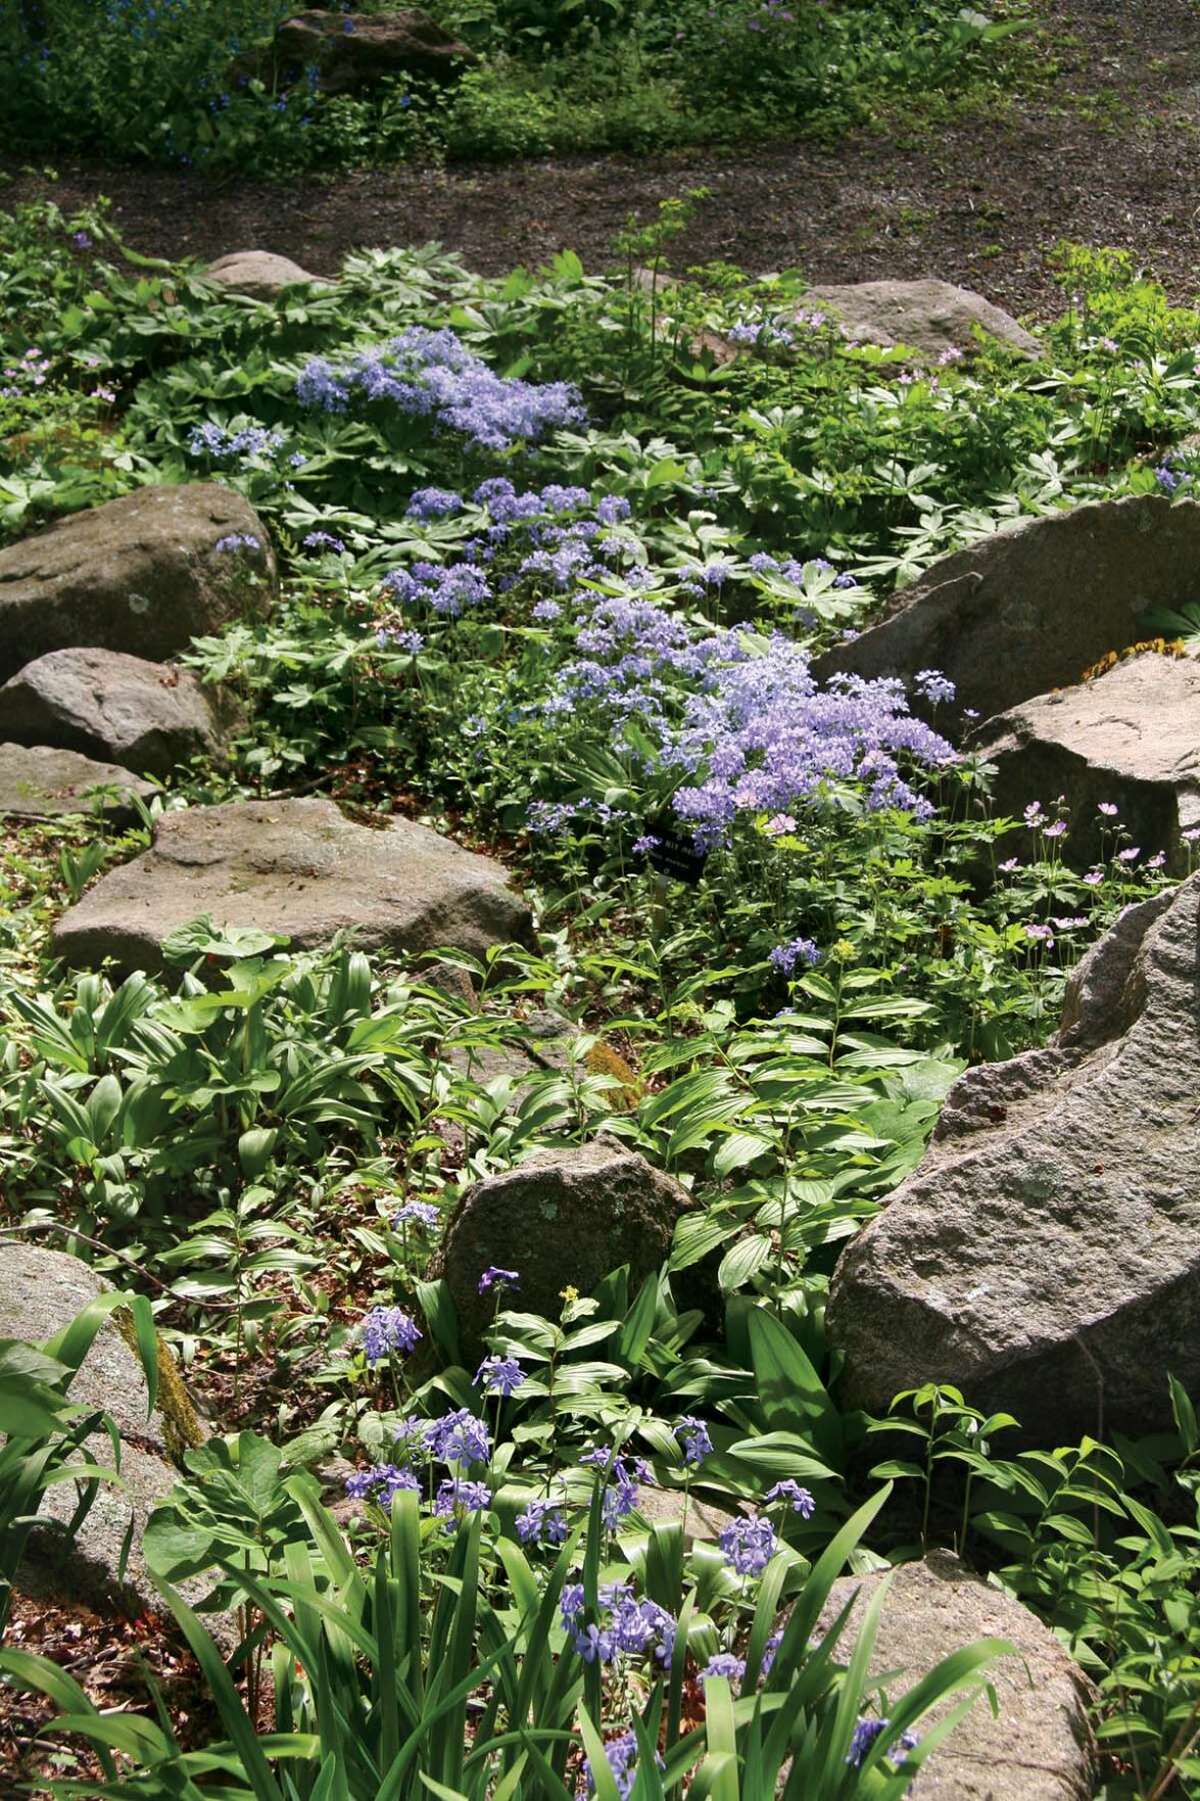 Rock garden with native wildflowers